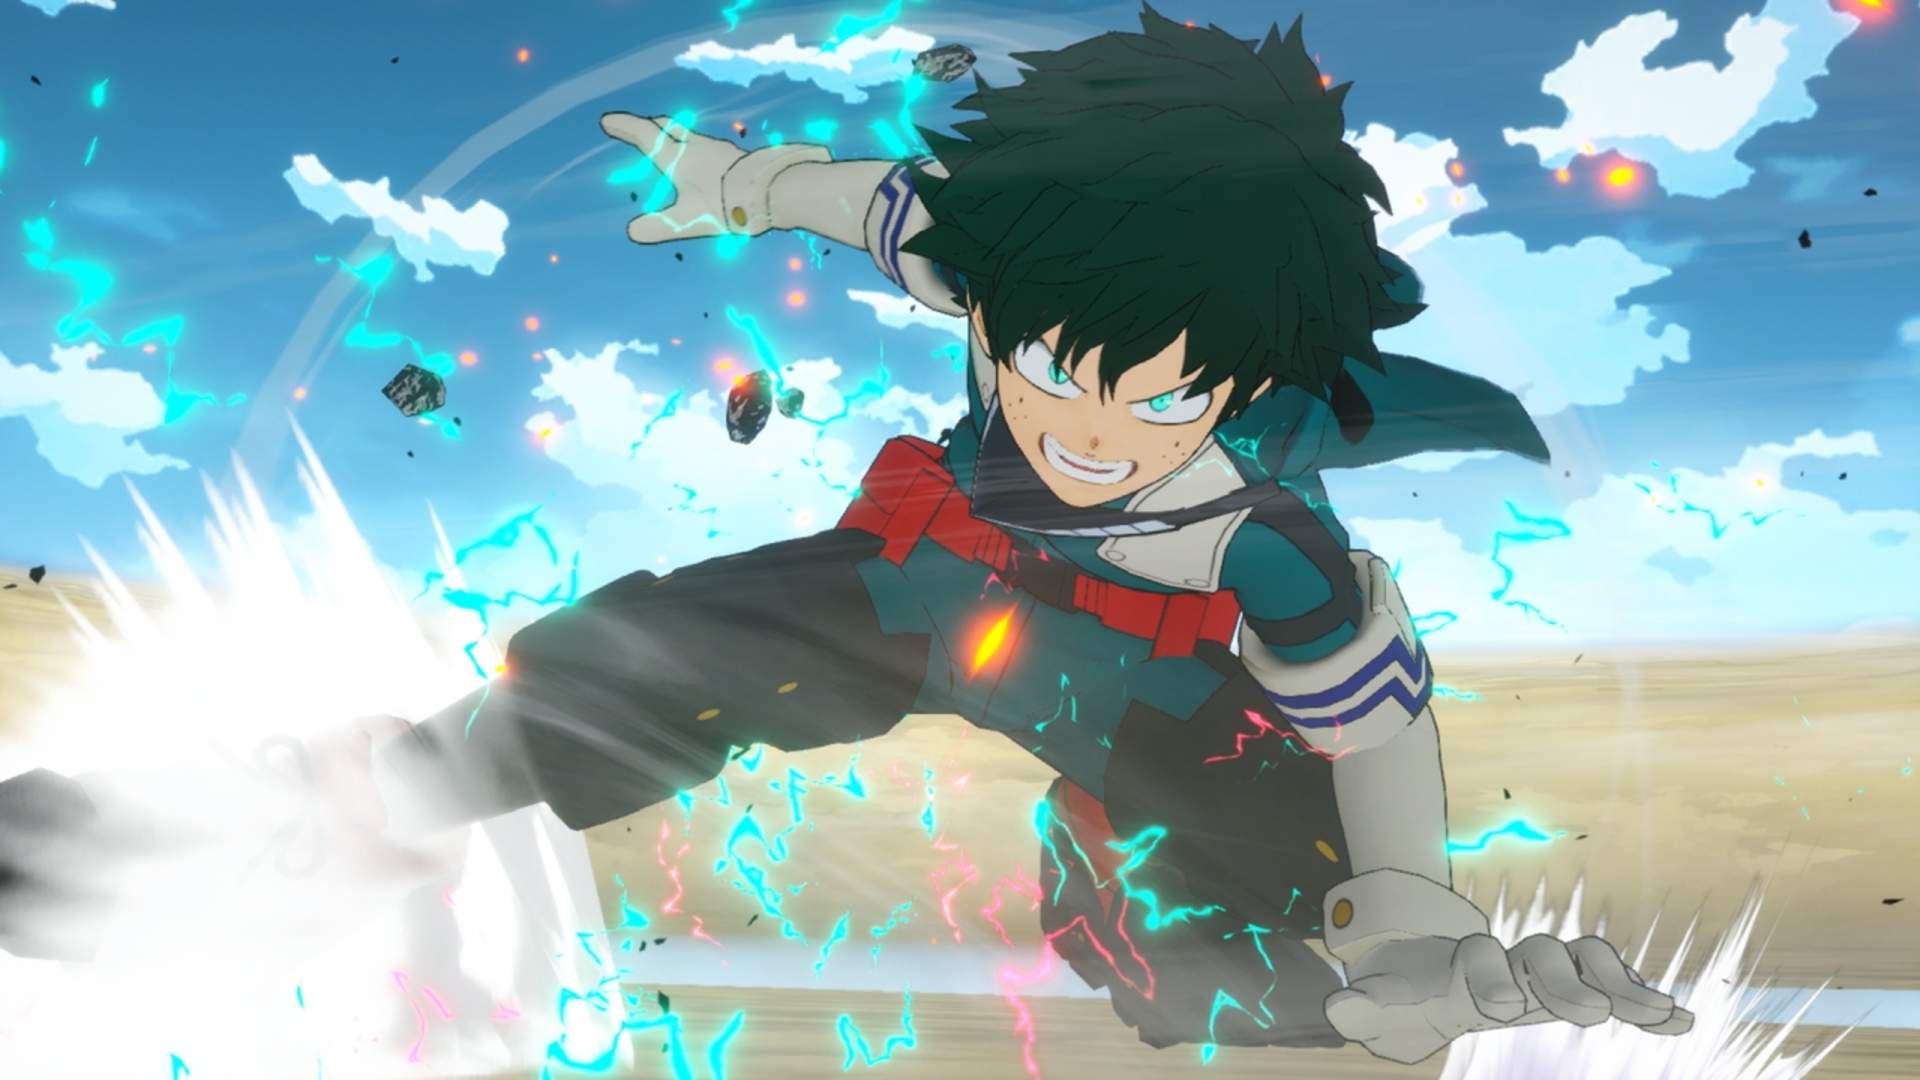 The New My Hero Academia Game Will Follow Season 4 of the Anime